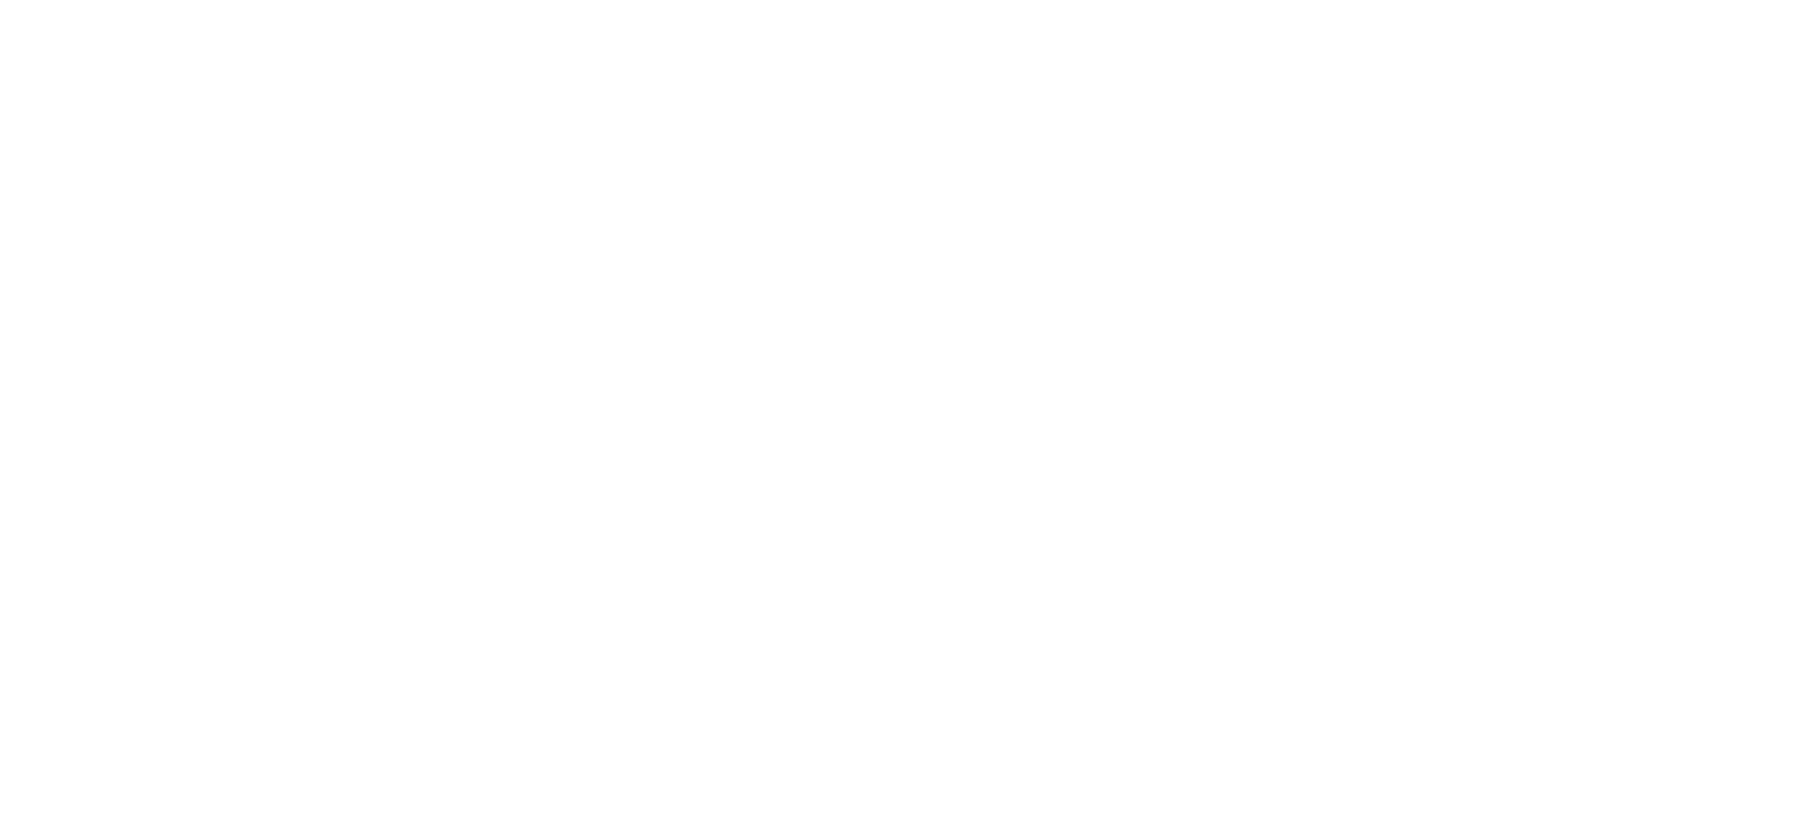 Penny Pullan